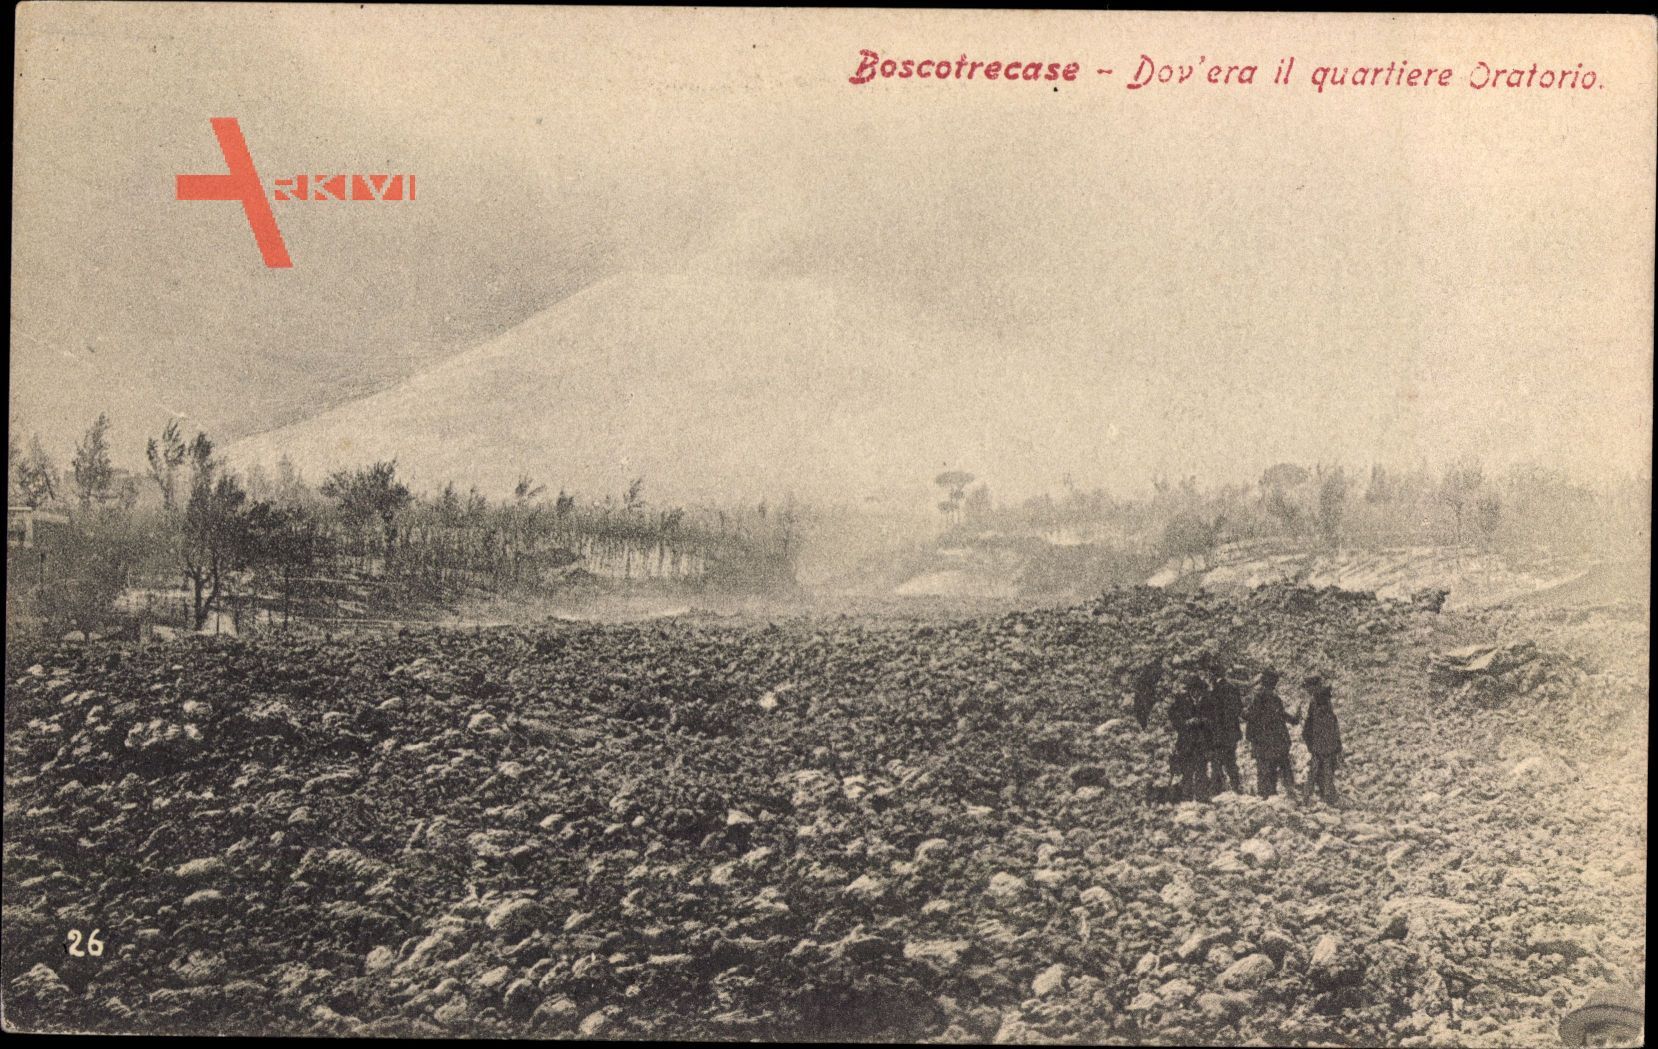 Boscotrecase Campania, nach dem Vulkanausbruch des Vesuv 1906, Steine